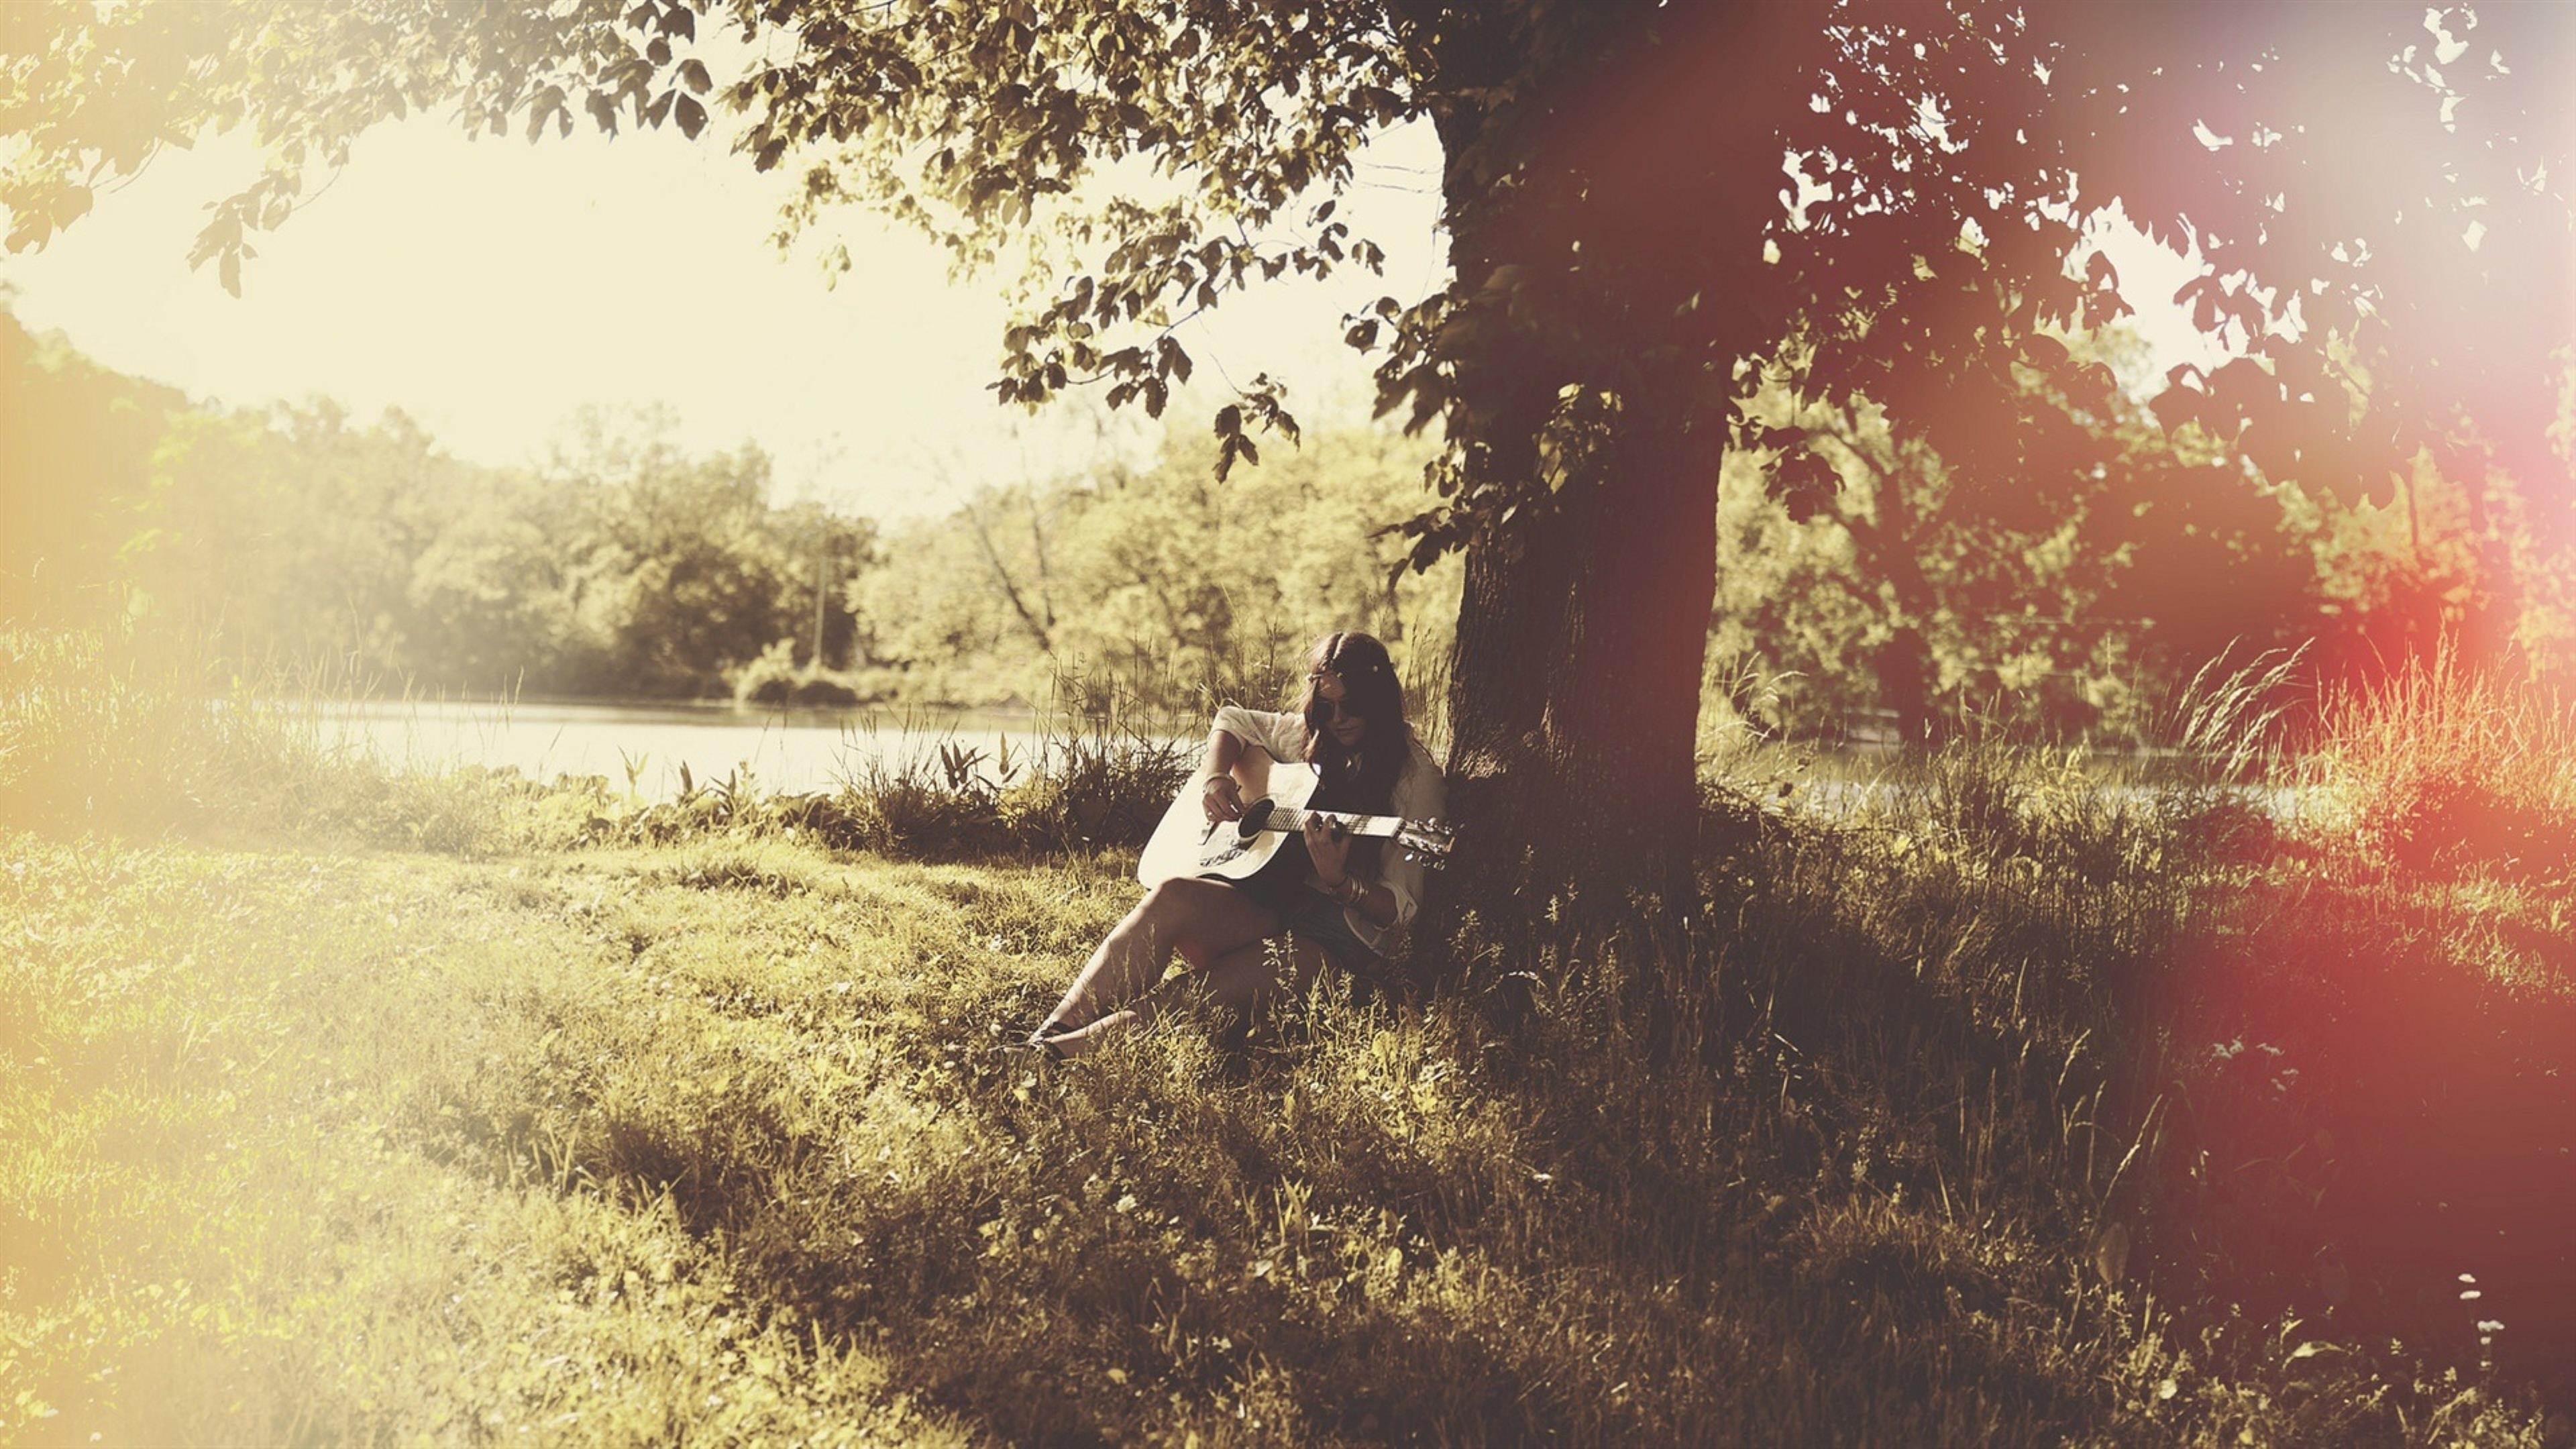 В предвкушении лета. Девушка под деревом. Девушка с гитарой на природе. Парень и девушка на природе. Природа Вдохновение.